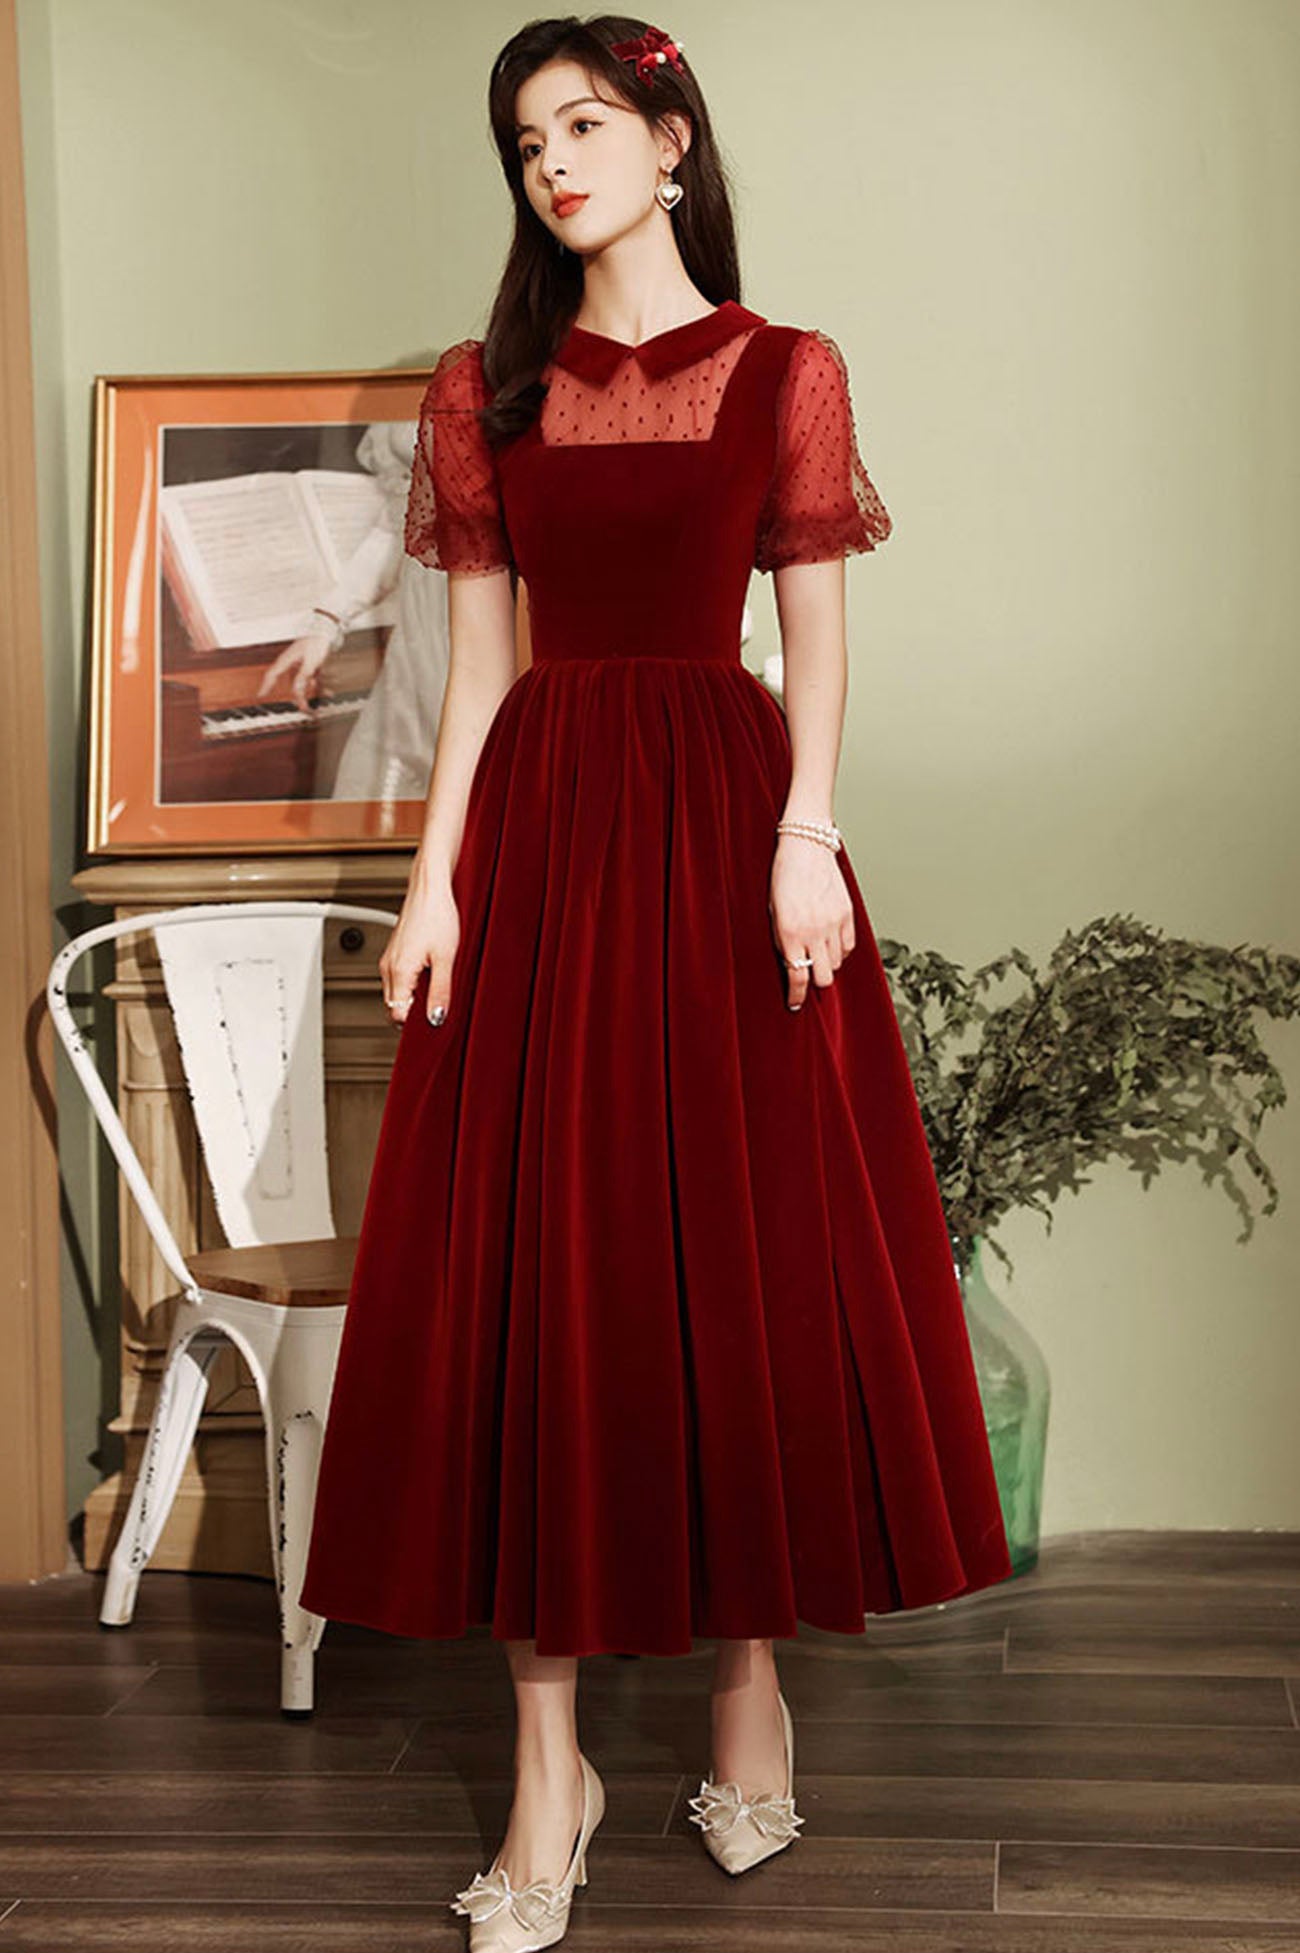 Burgundy Velvet Short Prom Dress, A-Line Homecoming Party Dress